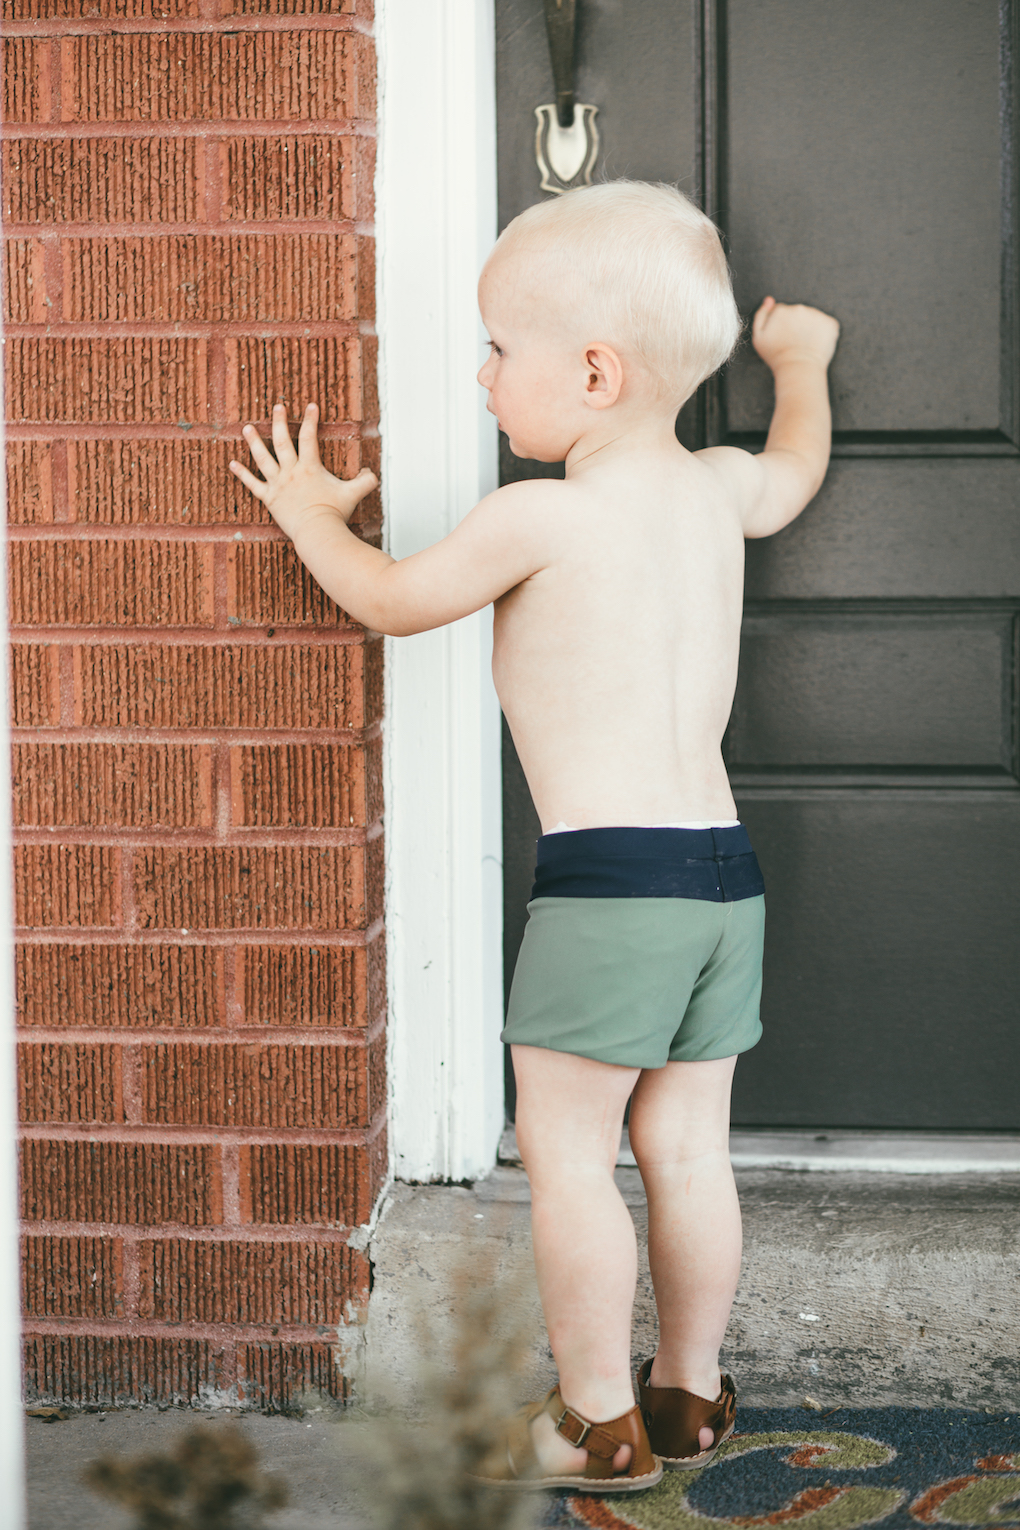 little boy wearing green swimmers knocking on the door